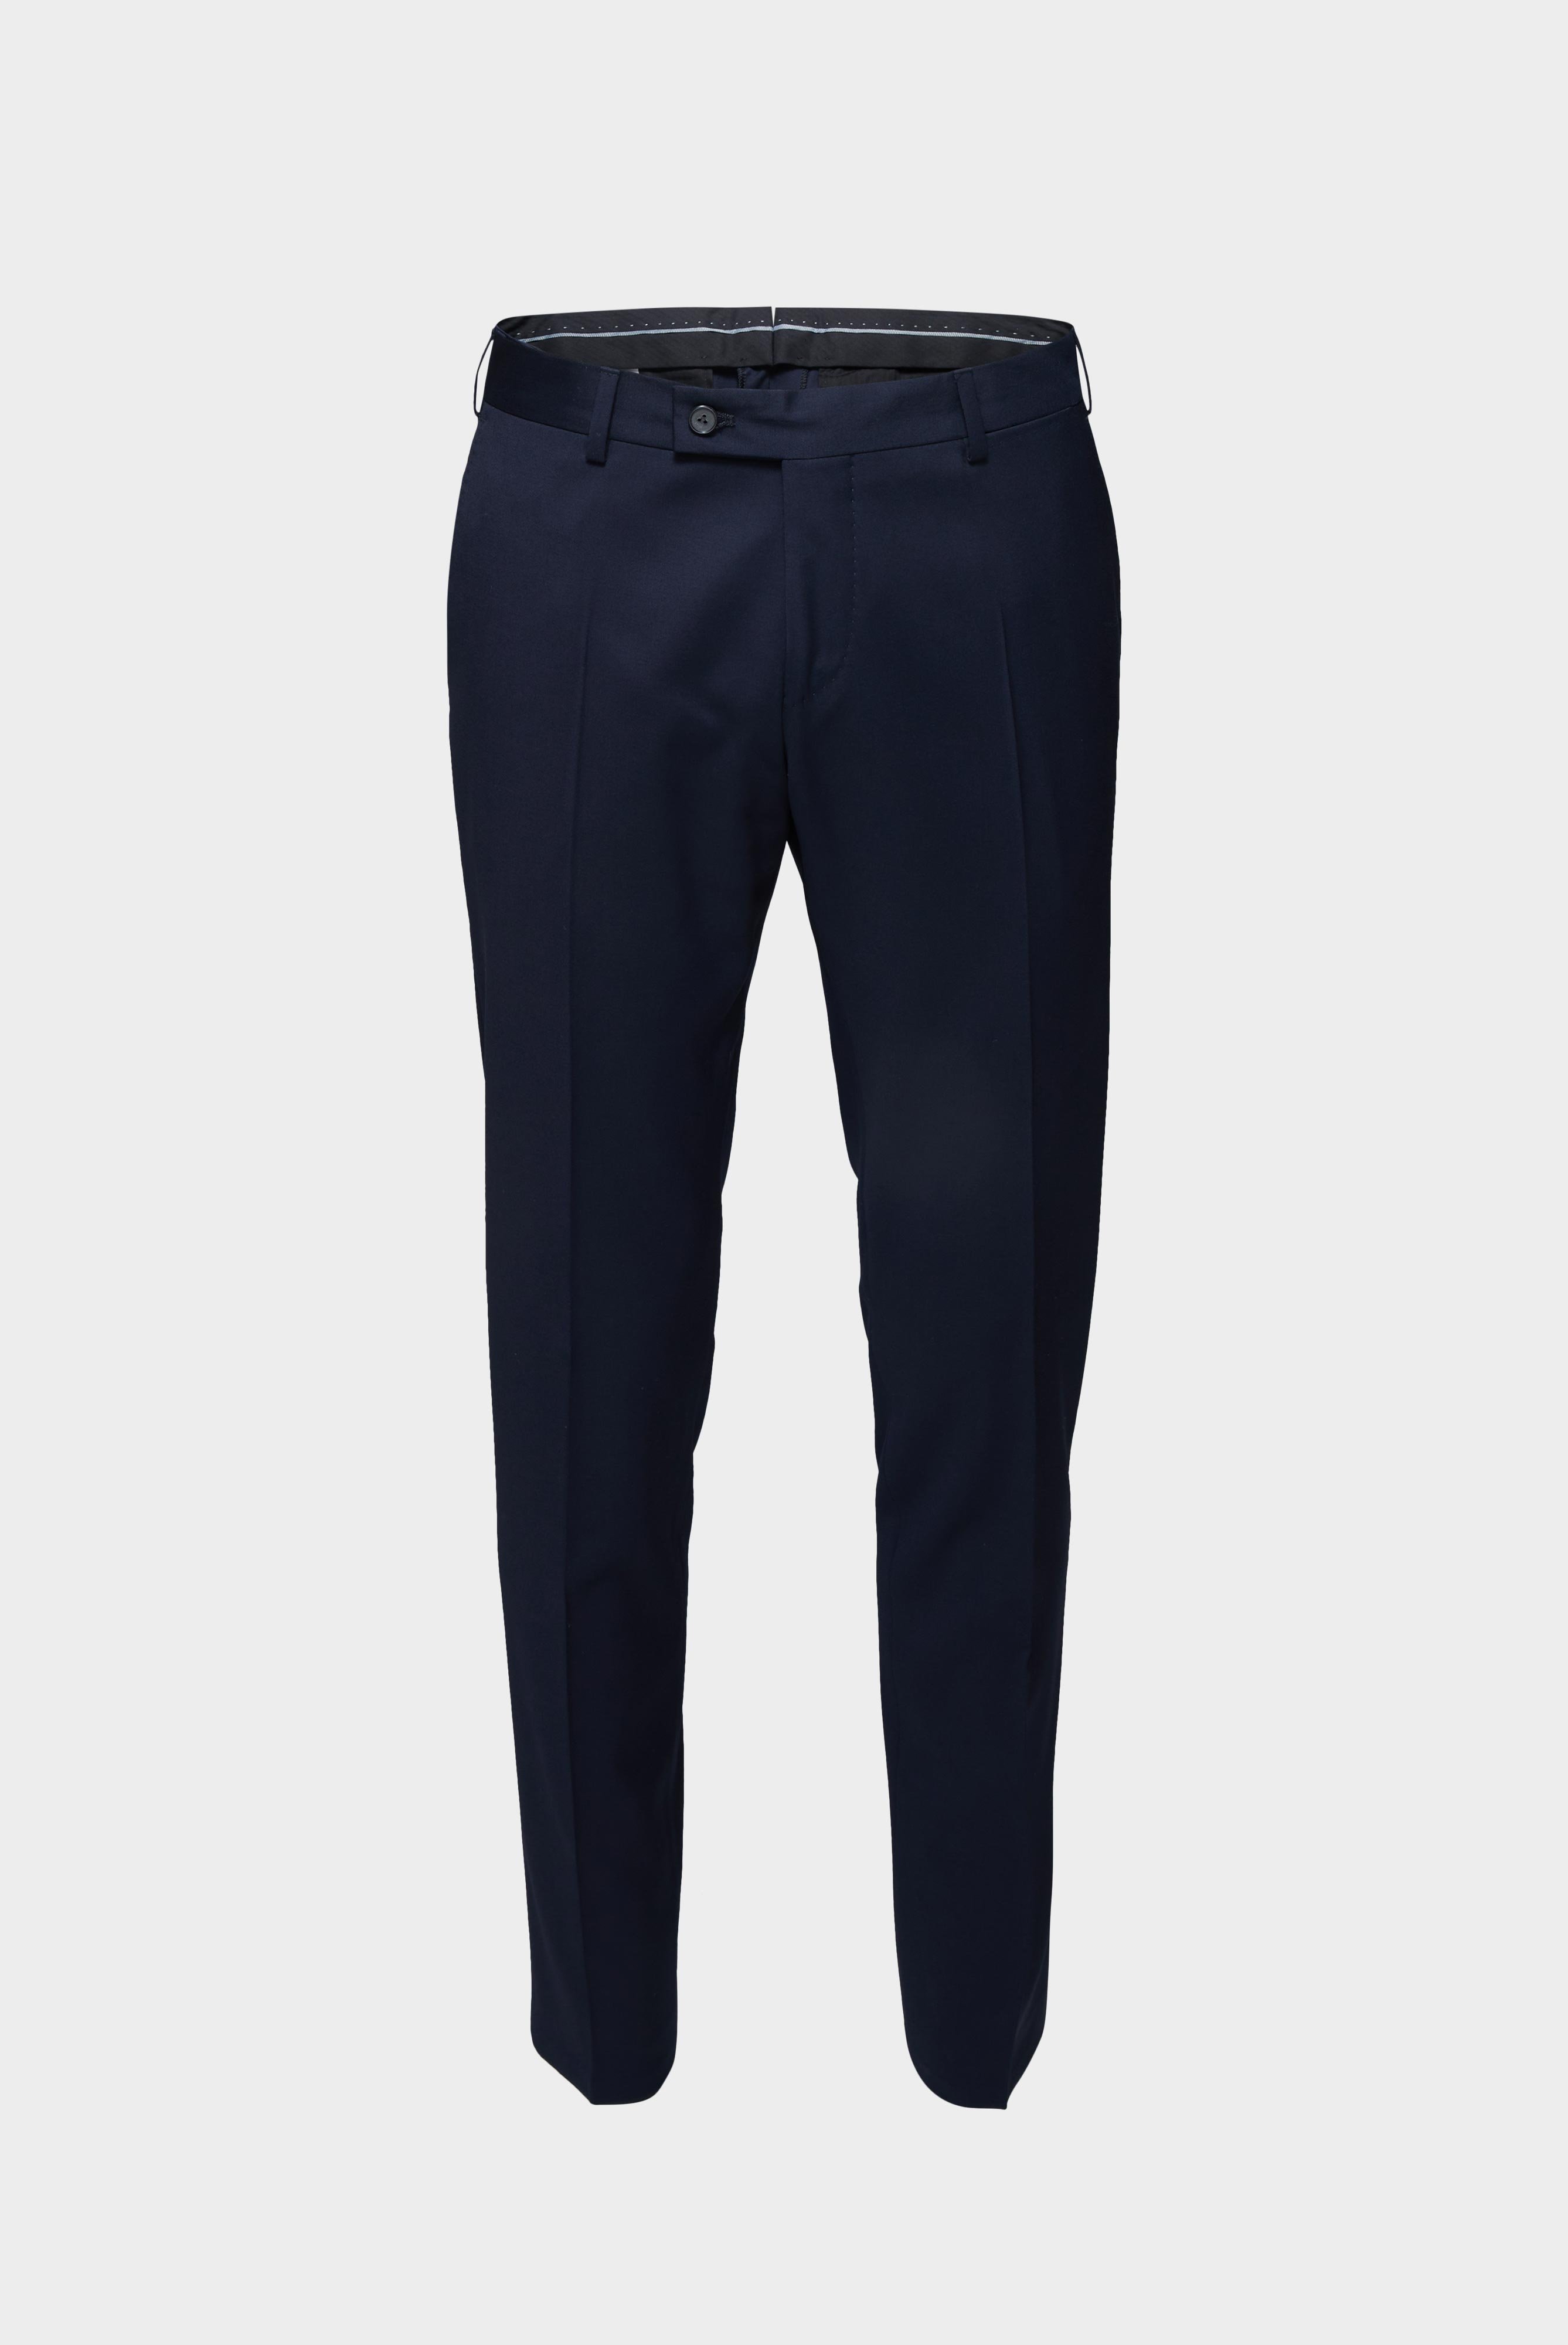 Jeans & Hosen+Hose aus Wolle Slim Fit+20.7880.16.H01010.780.23